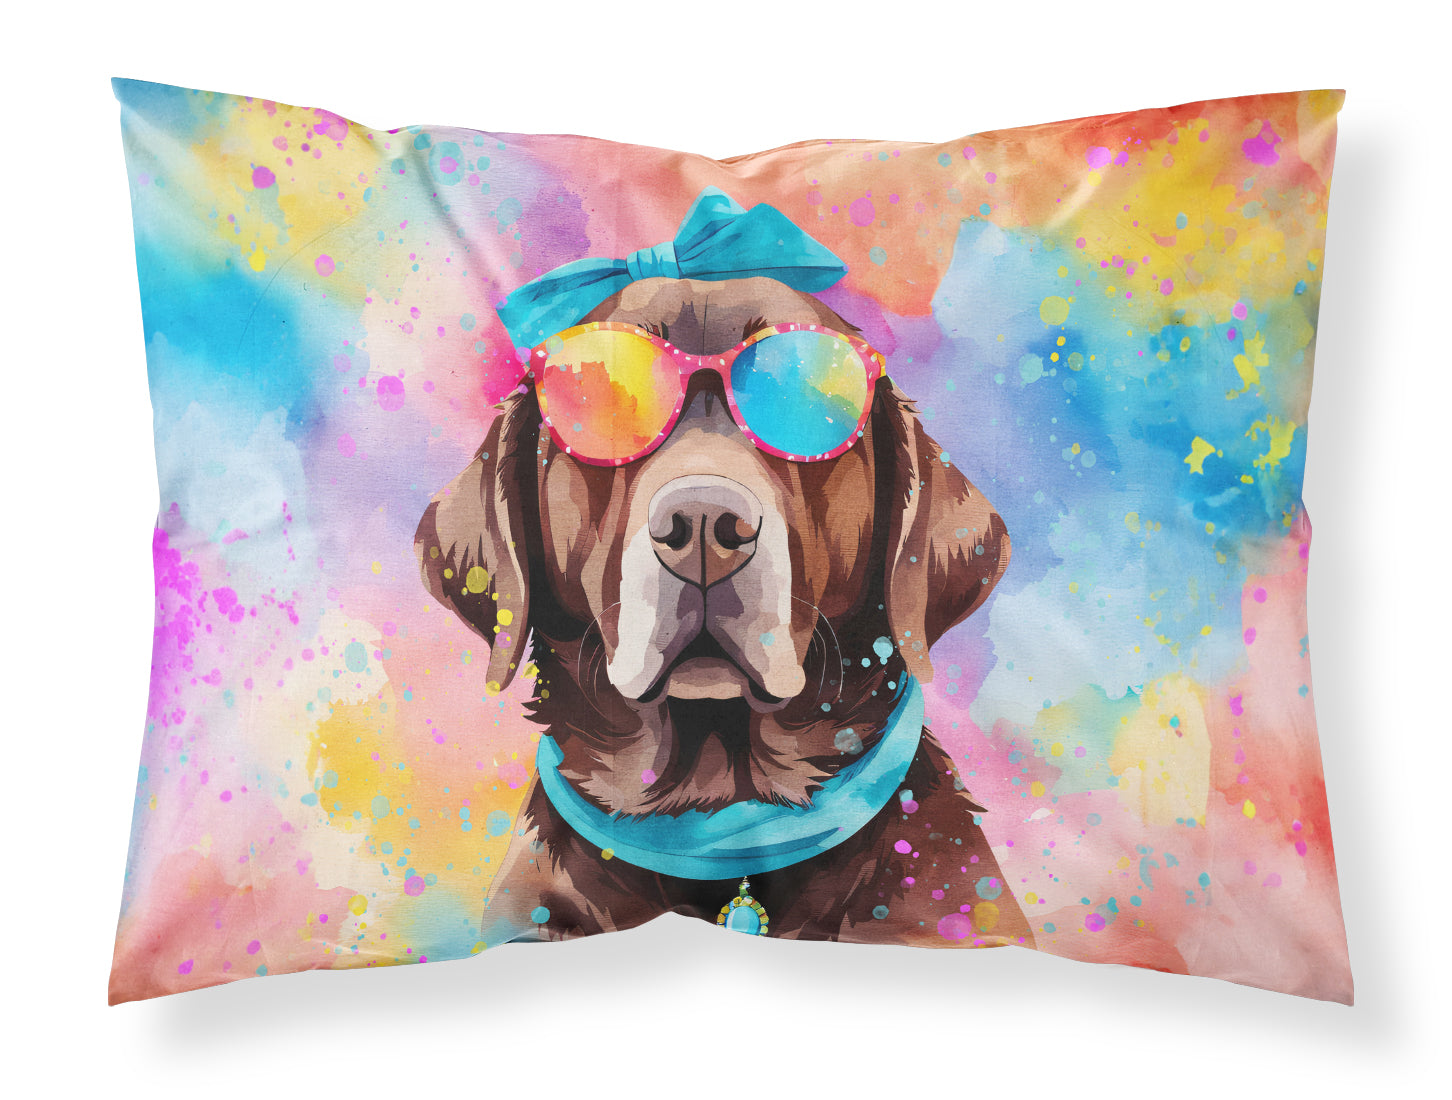 Buy this Chocolate Labrador Hippie Dawg Standard Pillowcase